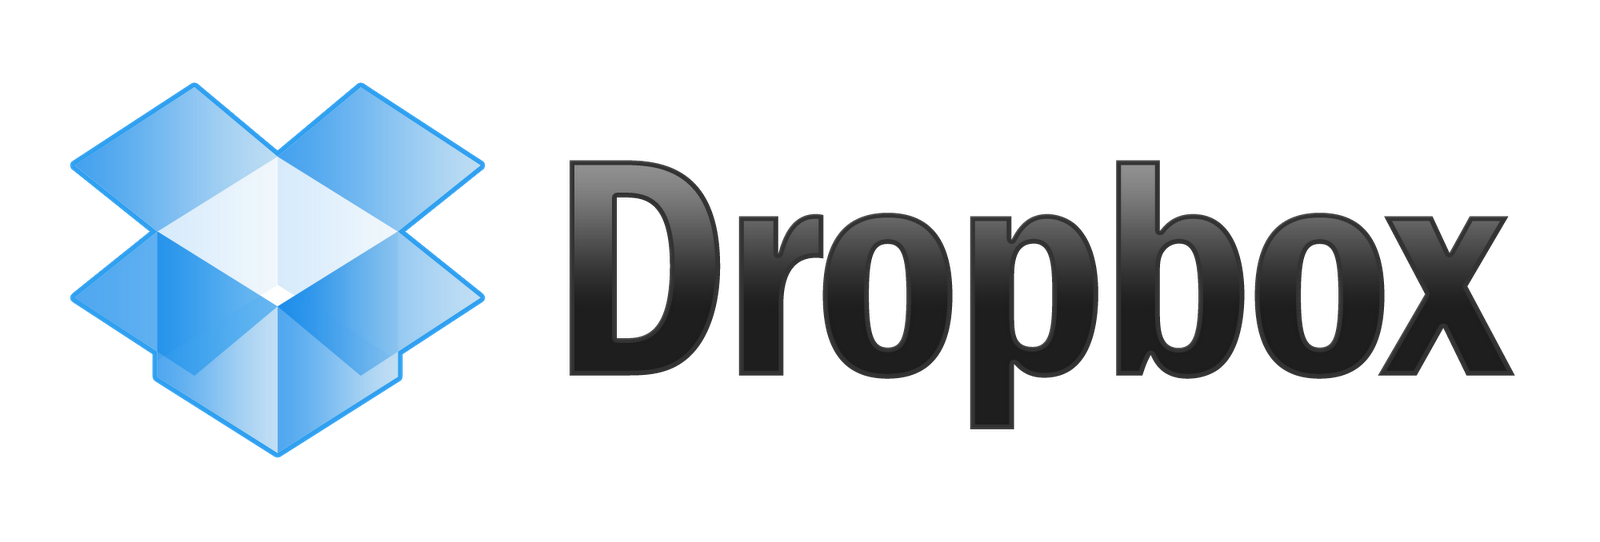 DropBox Free Download